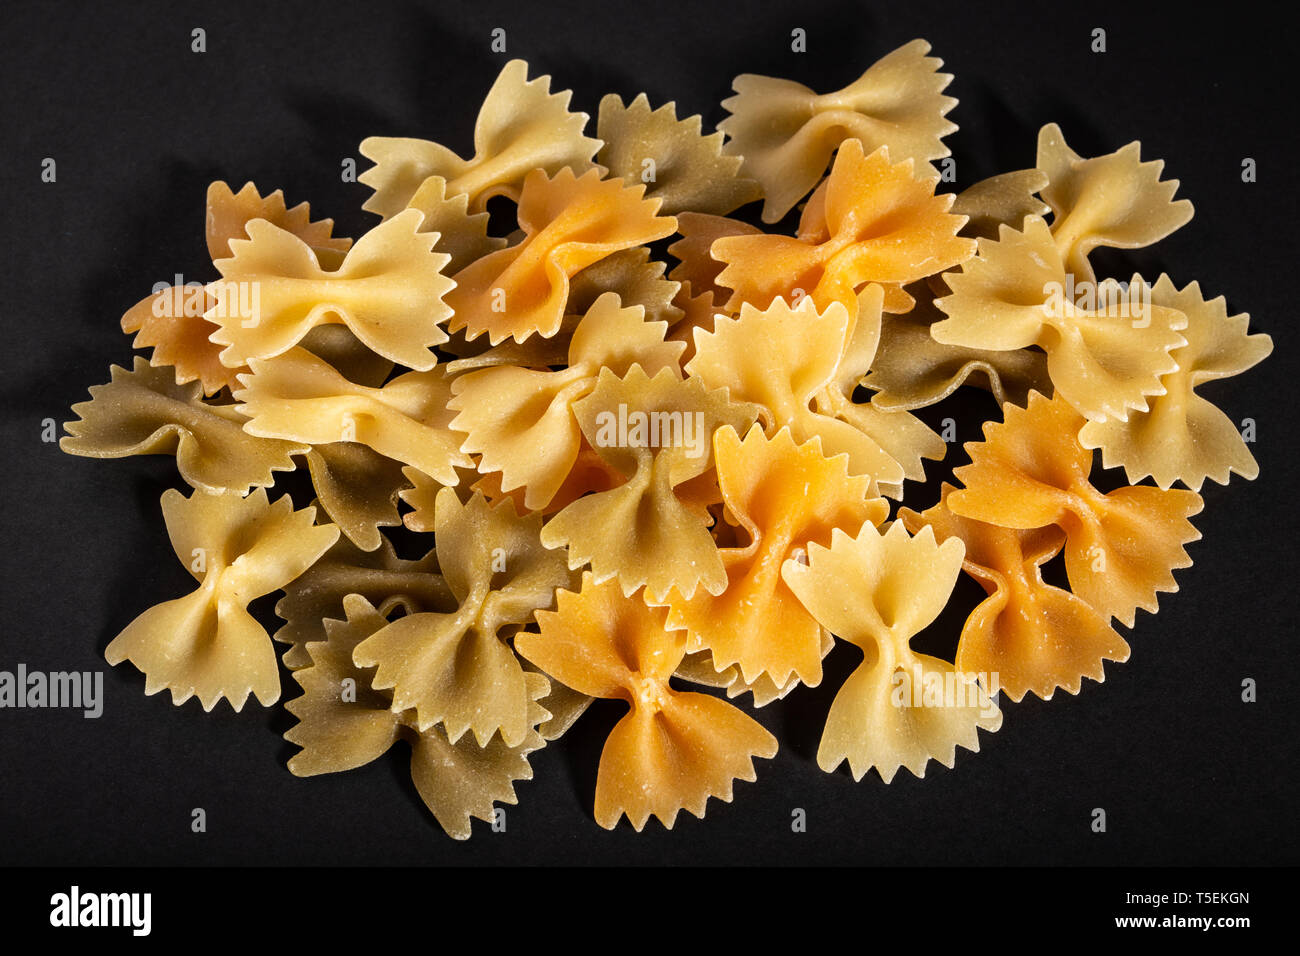 Colorful raw bow tie pasta on black background. Farfalle pasta Stock Photo